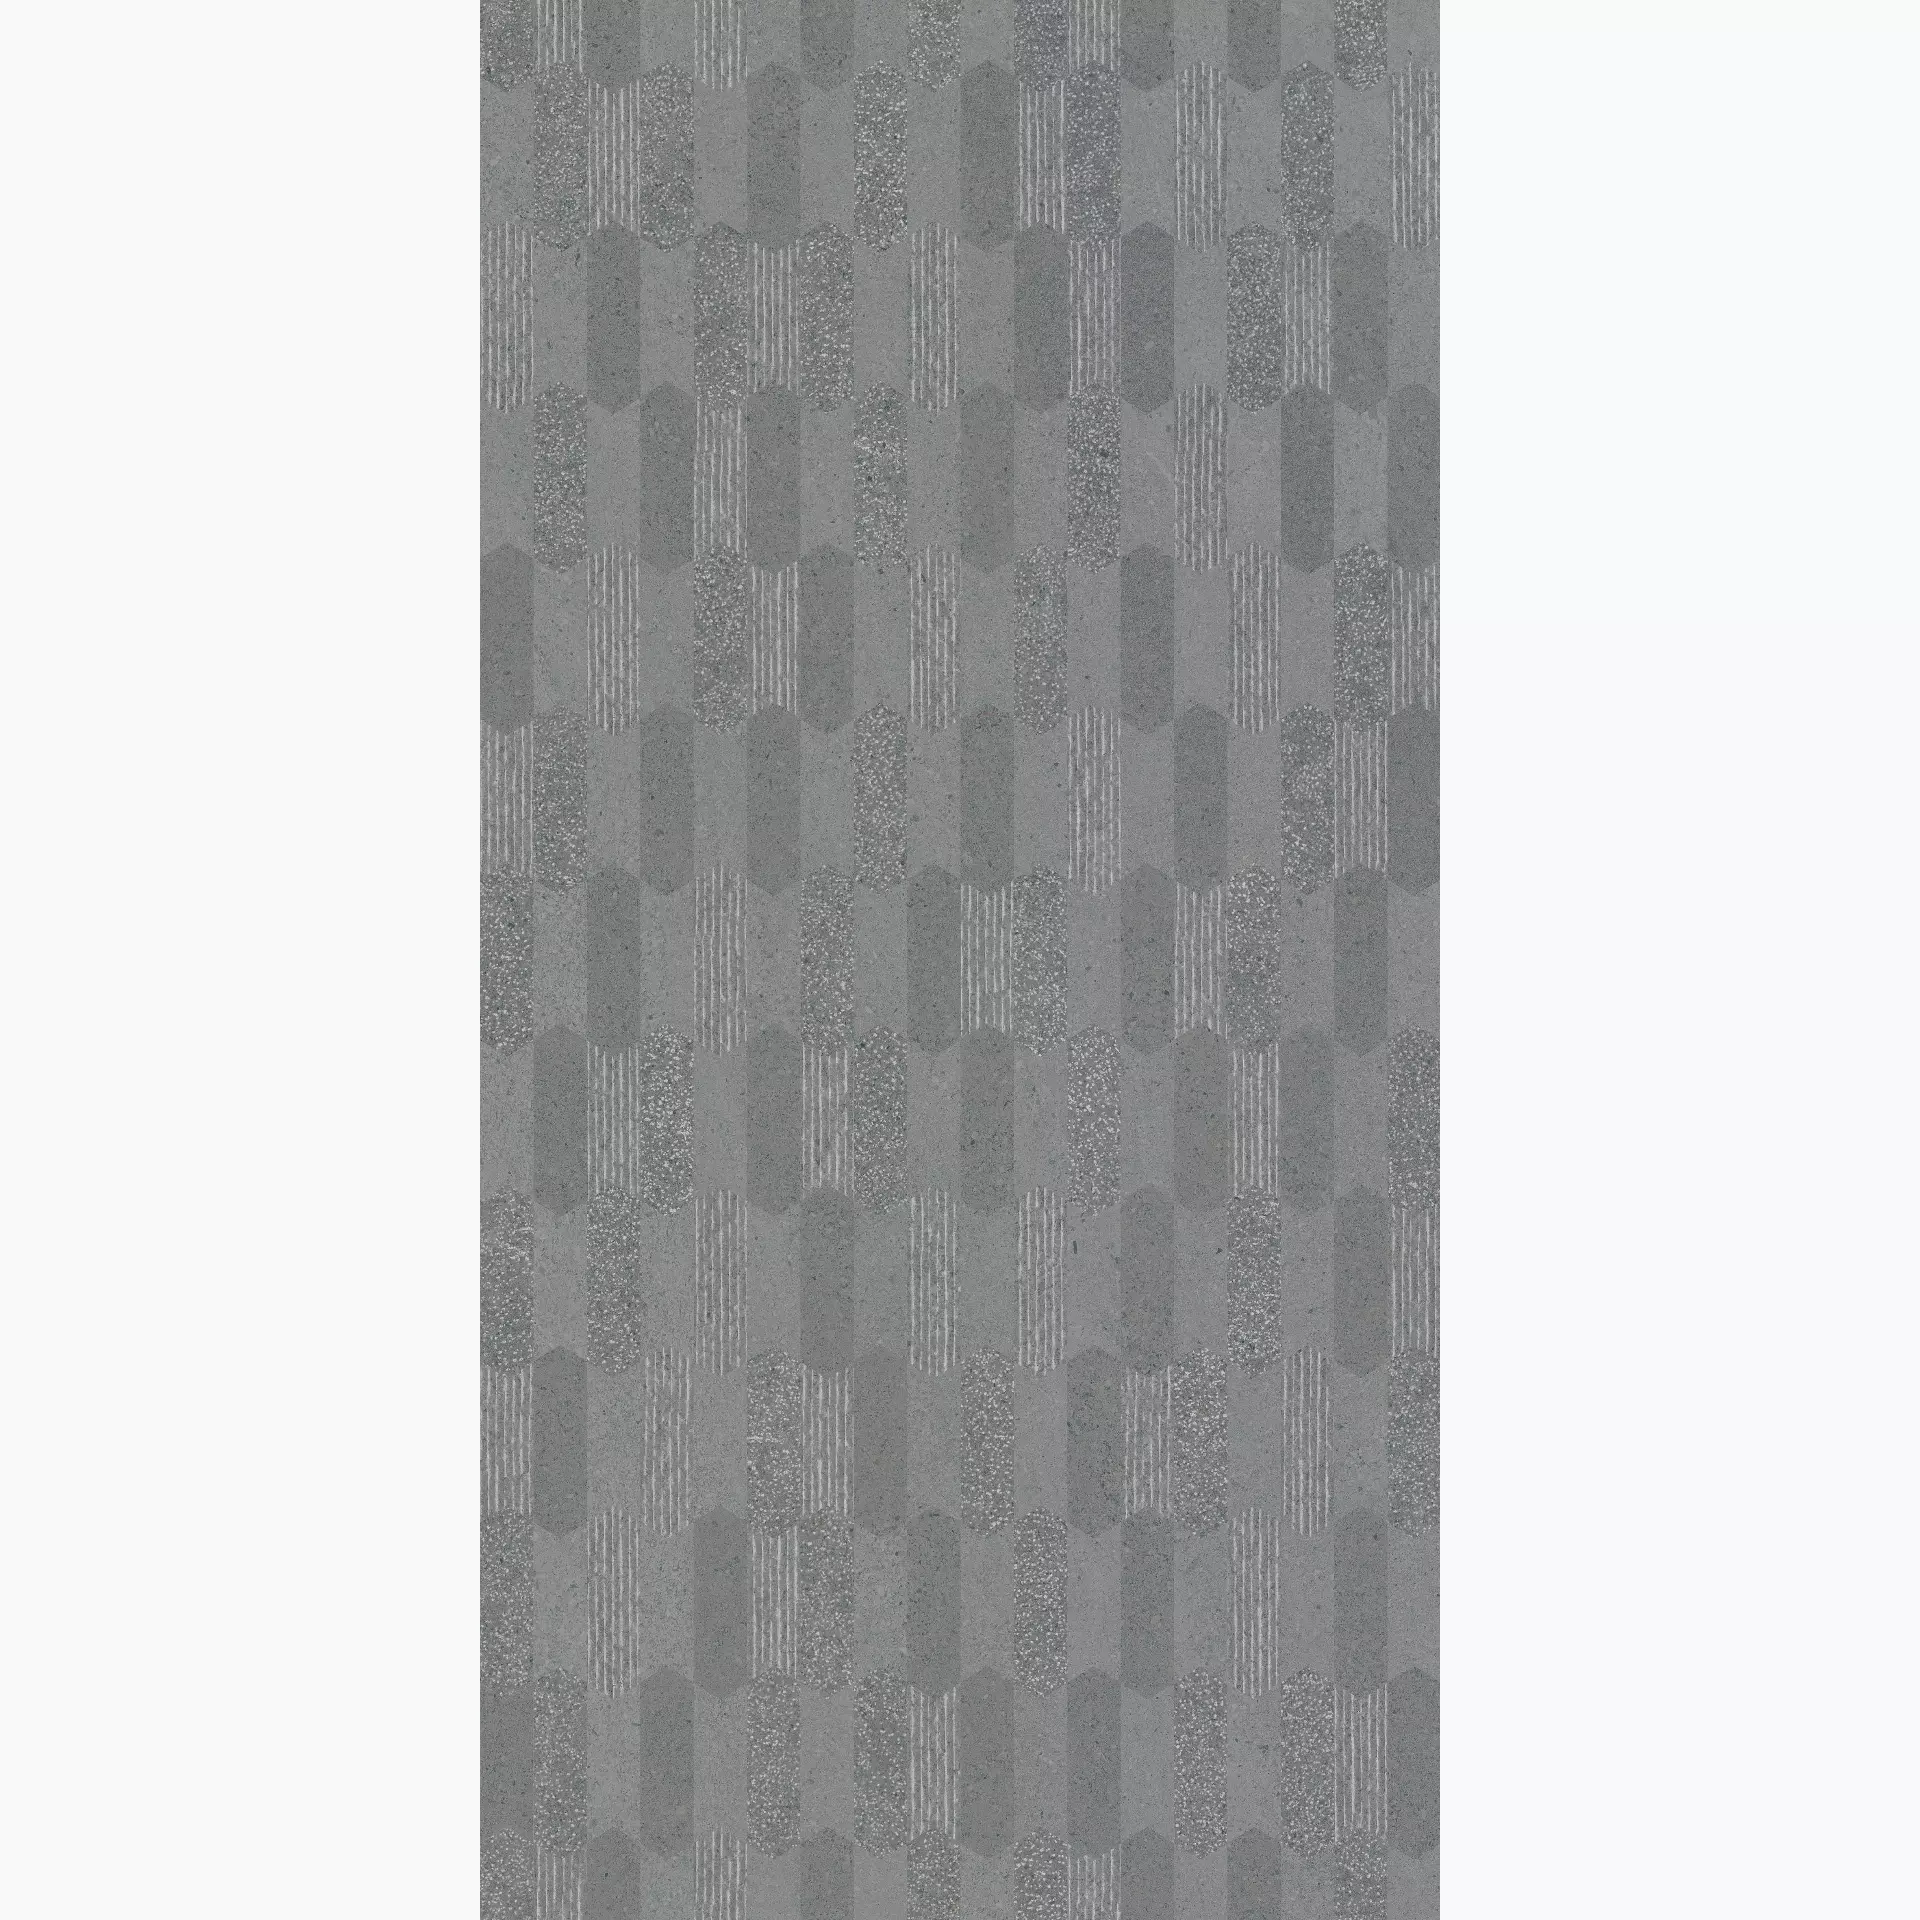 Flaviker Rockin Grey Naturale Decor Lozenge PF60010126 60x120cm rectified 8,5mm